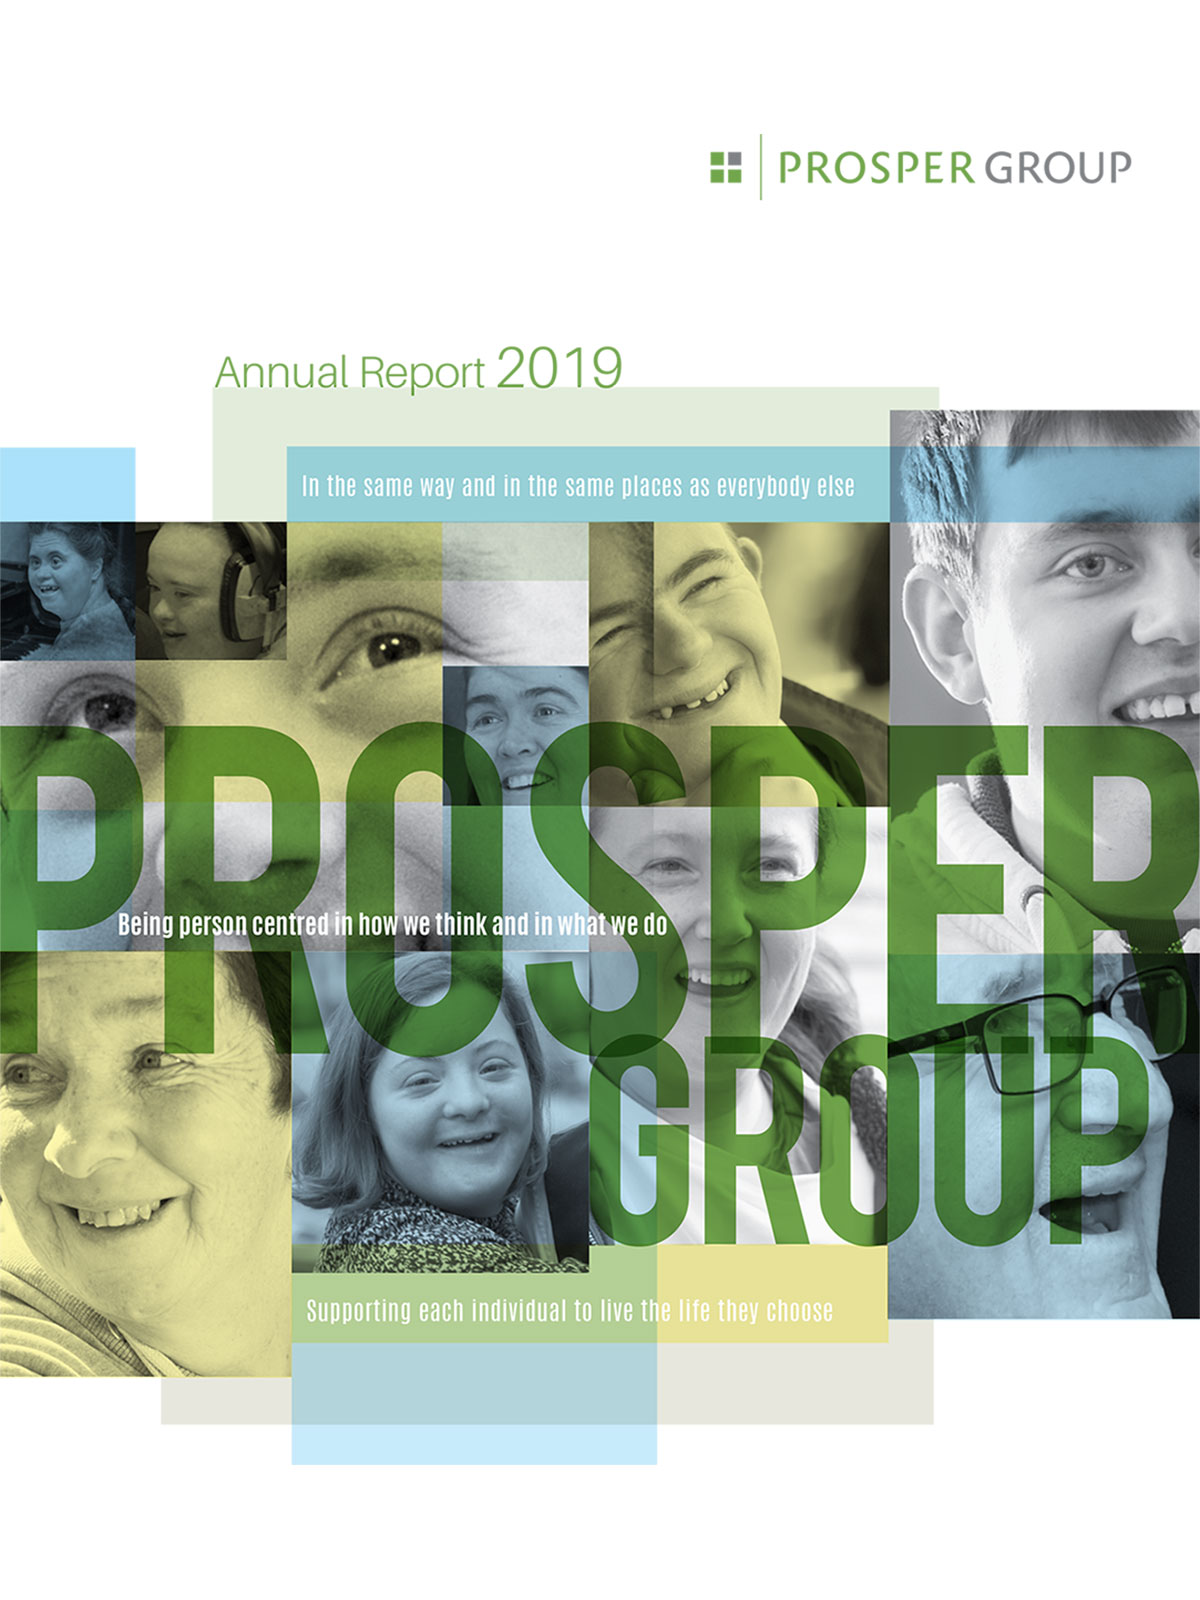 Prosper Group Annual Report 2019